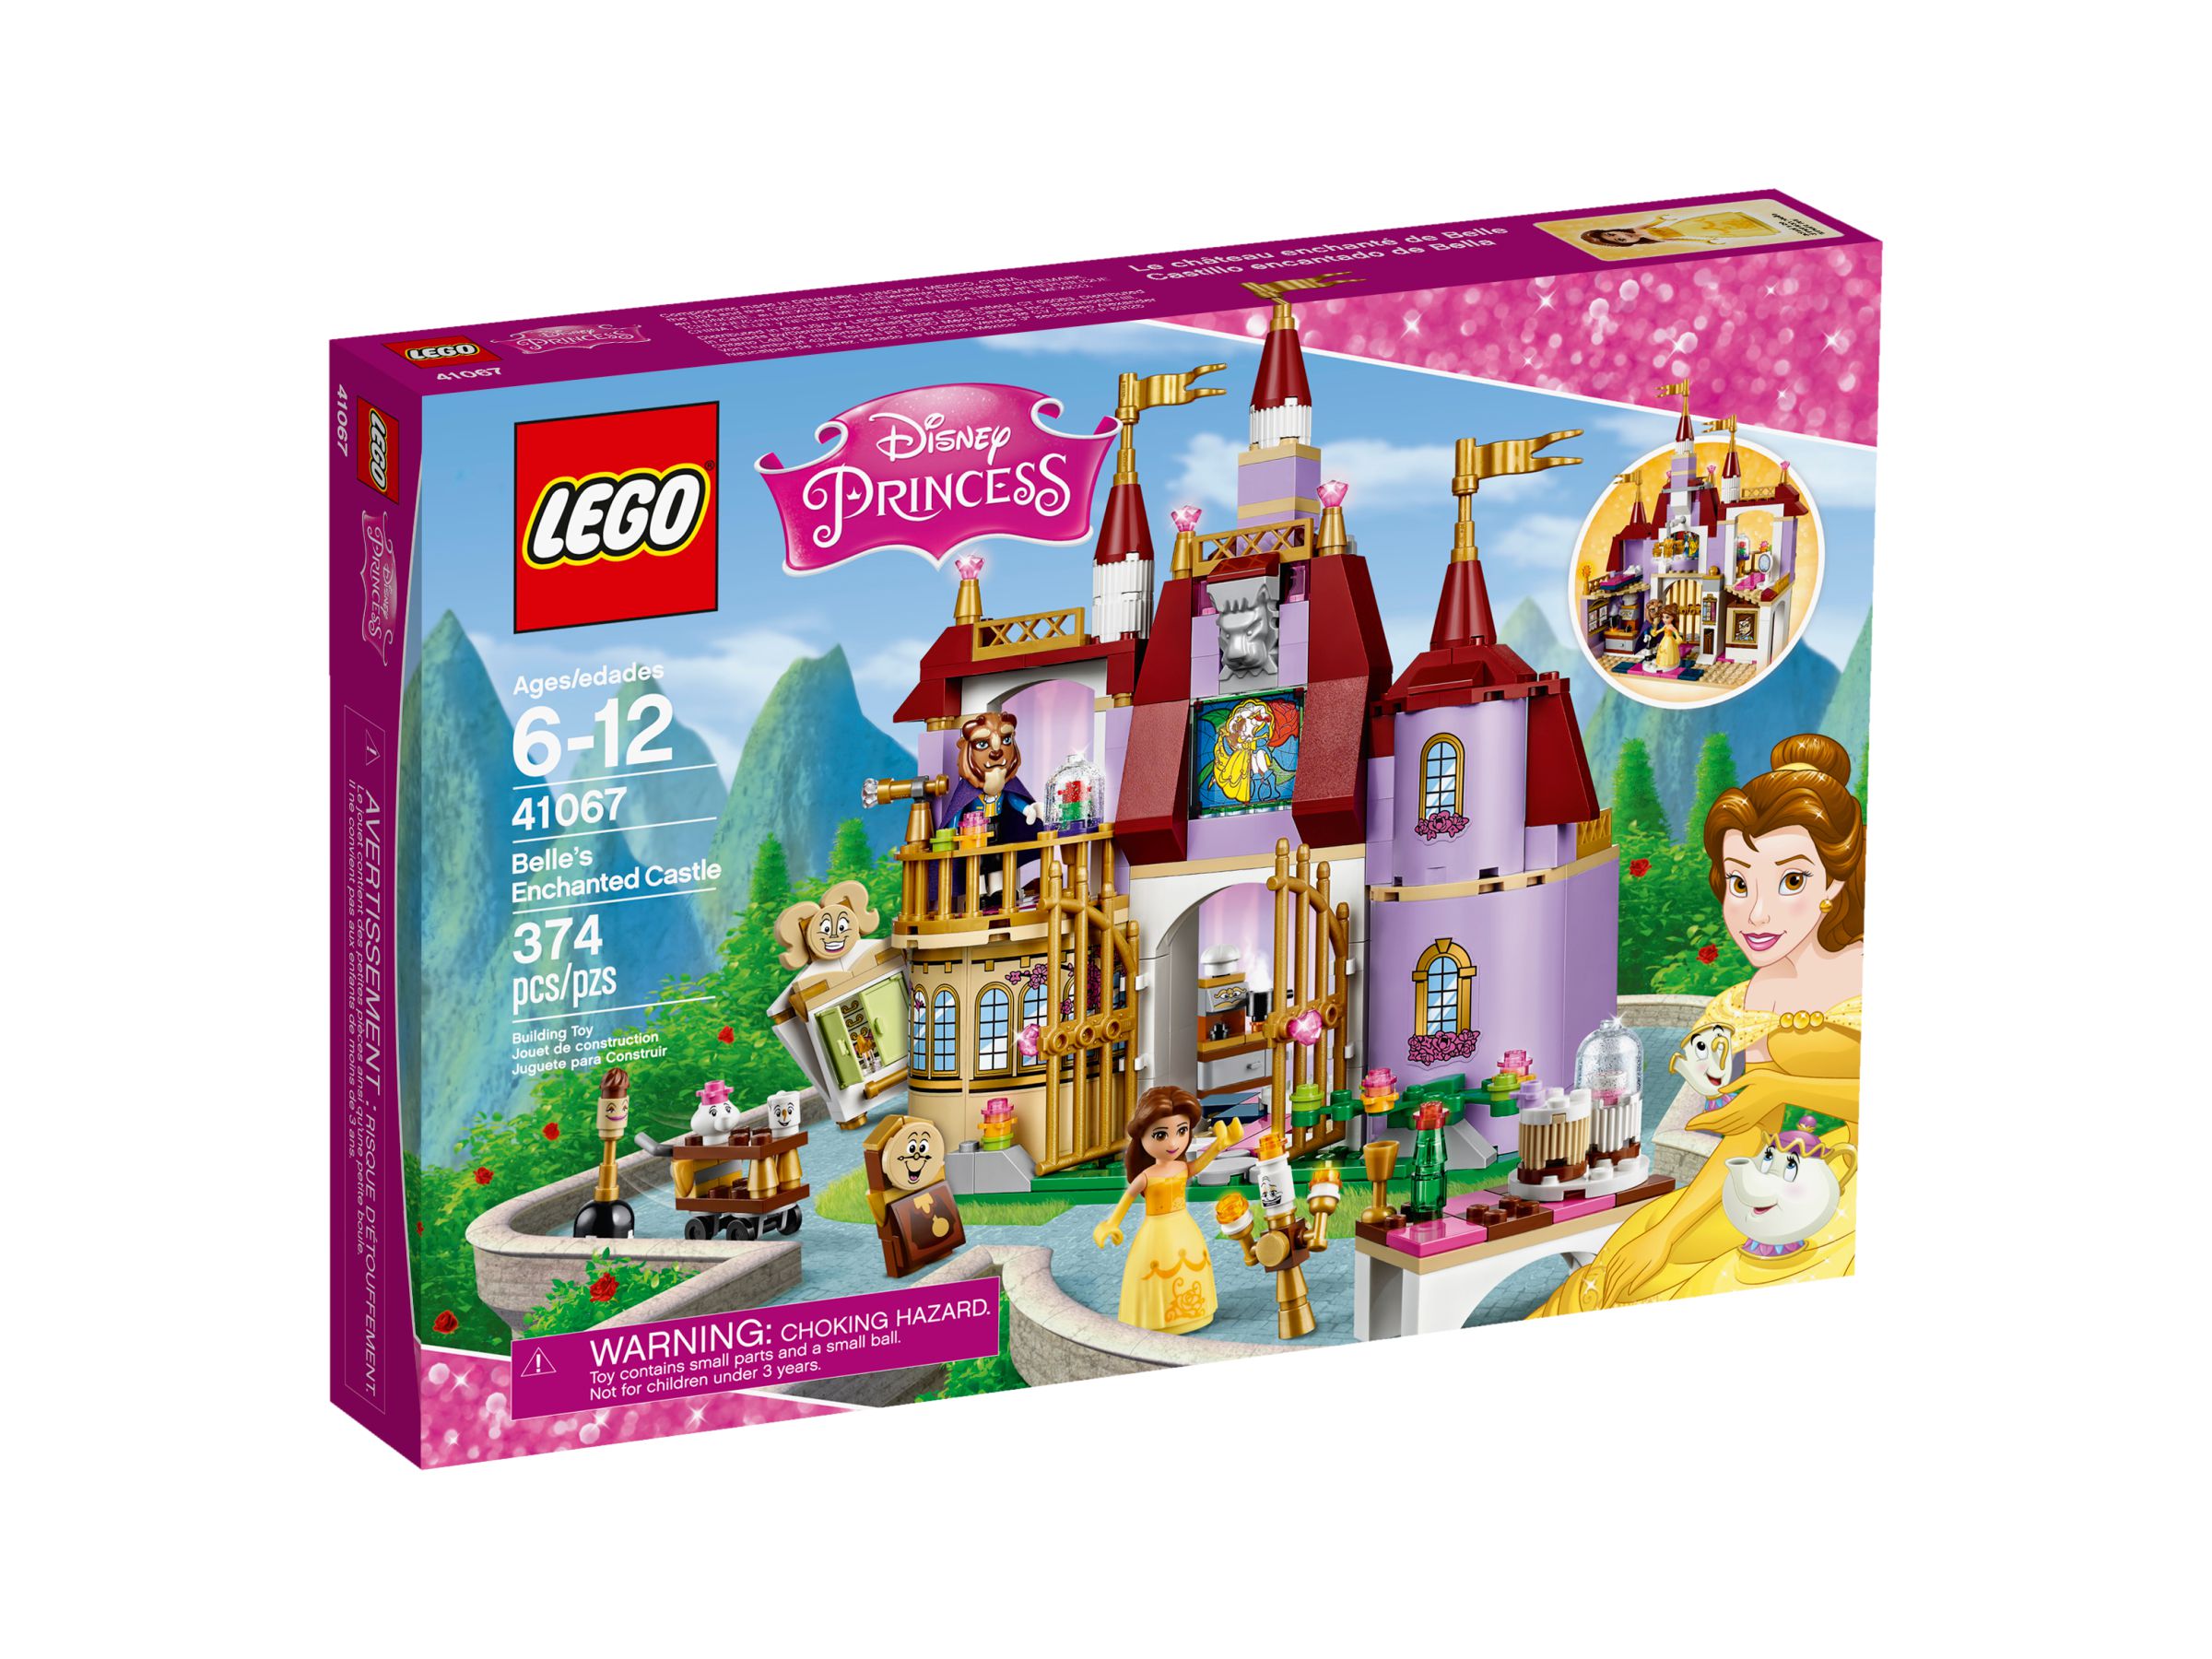 LEGO Disney 41067 Belles bezauberndes Schloss LEGO_41067_alt1.jpg